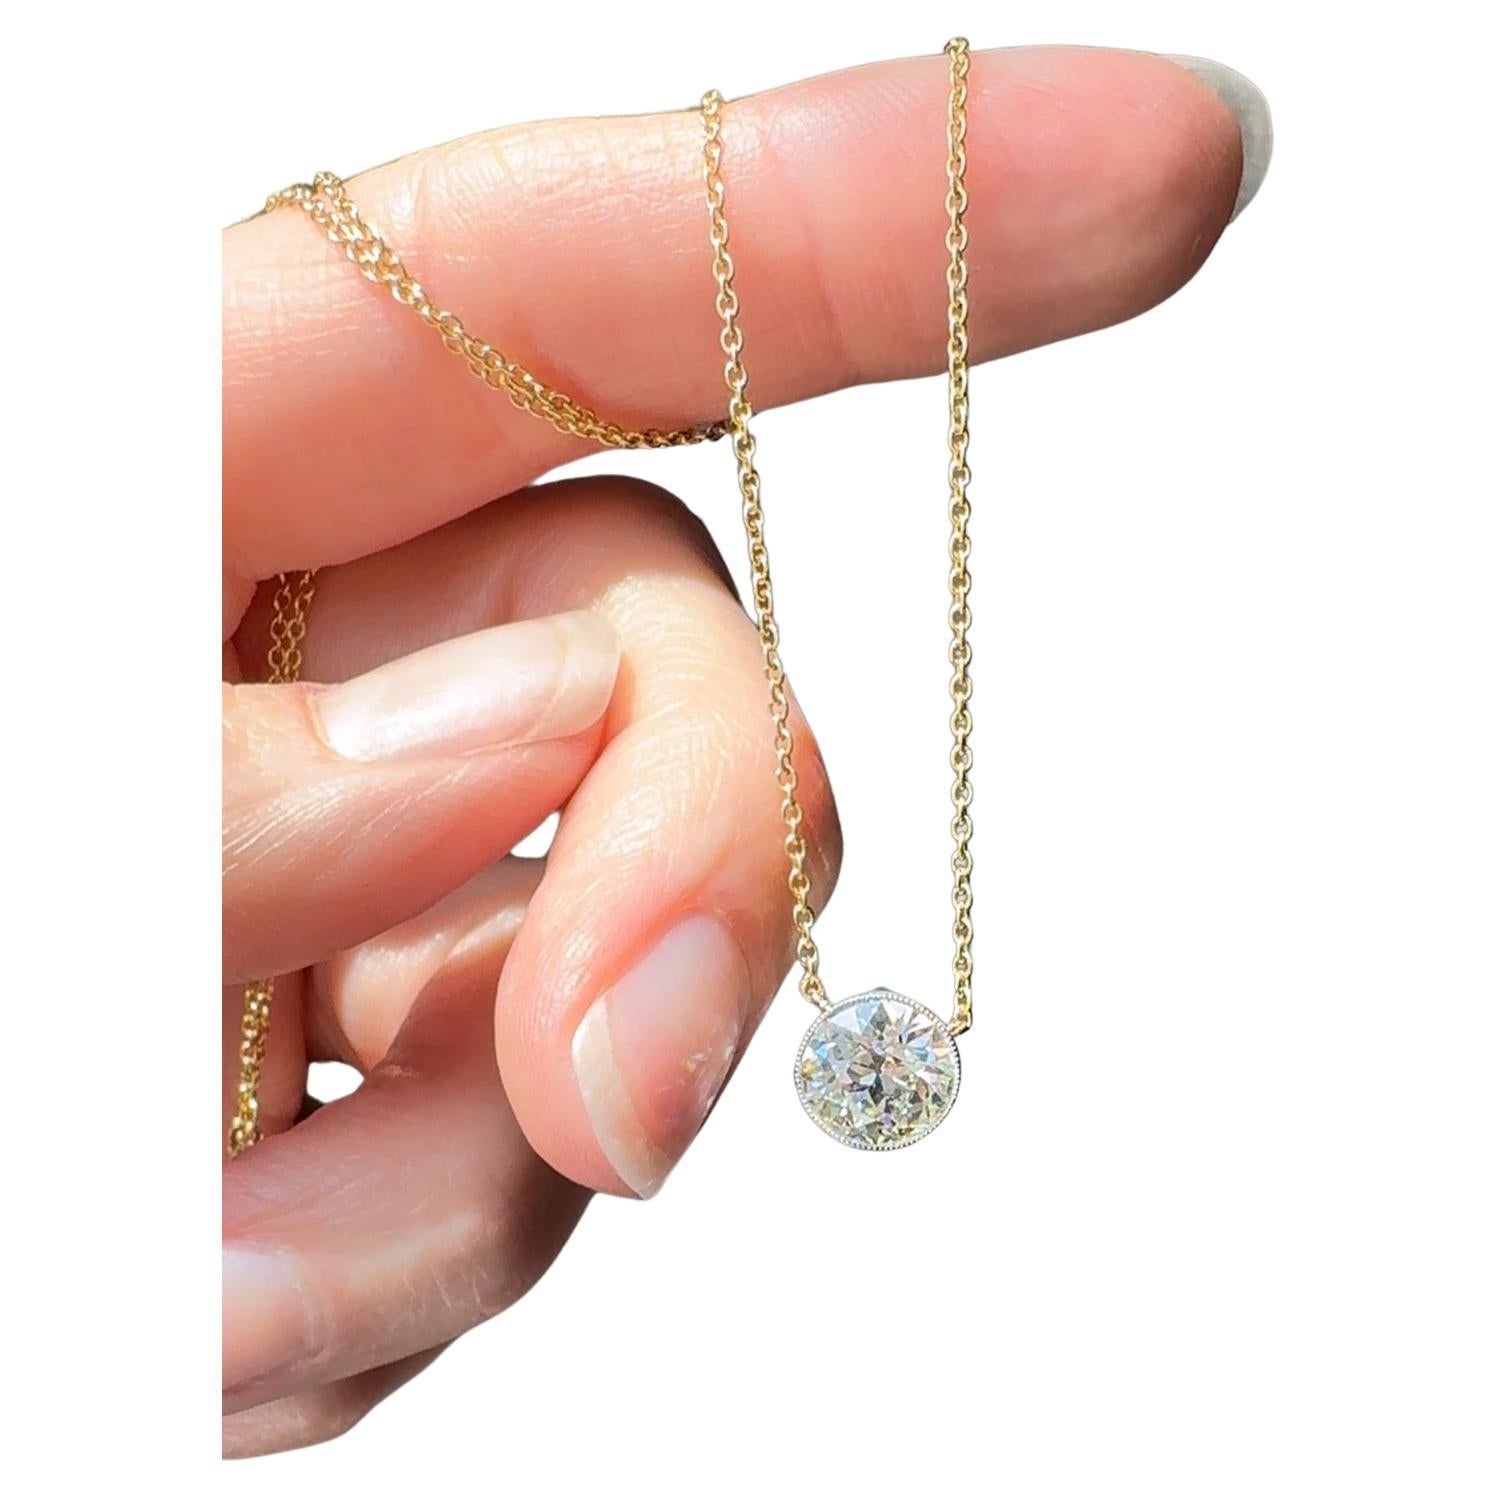 Bespoke 1.97 Carat Diamond Solitaire Necklace